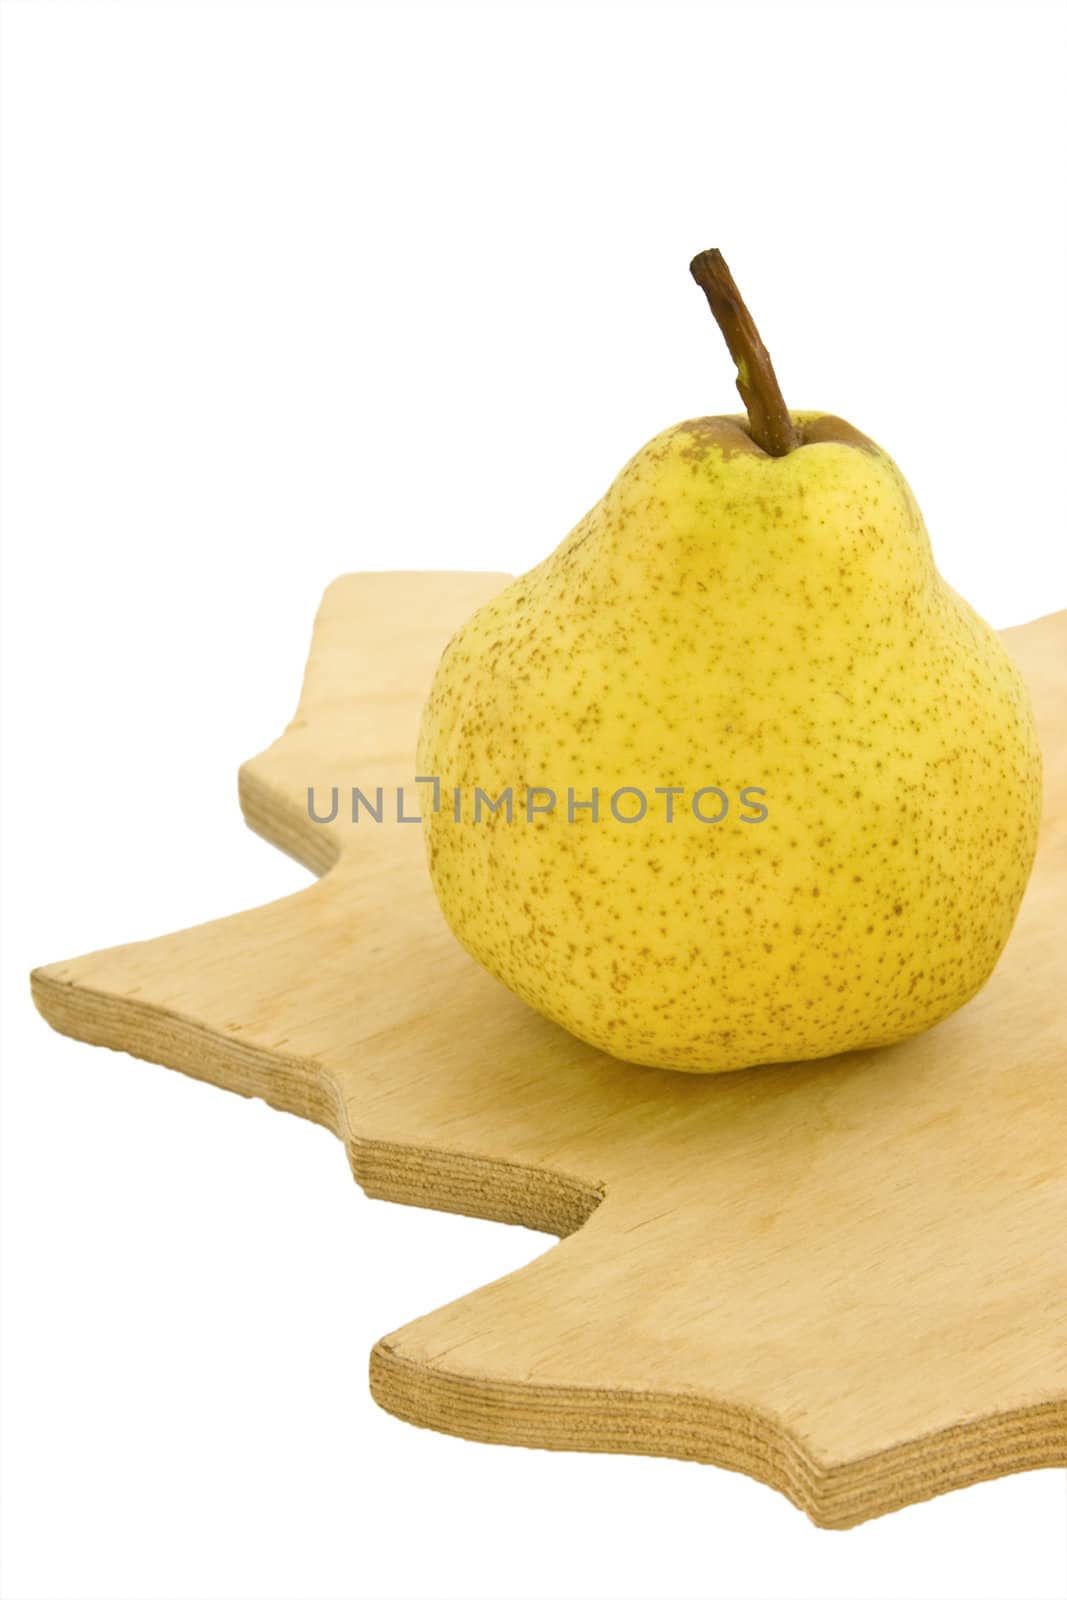 Pear by rozhenyuk